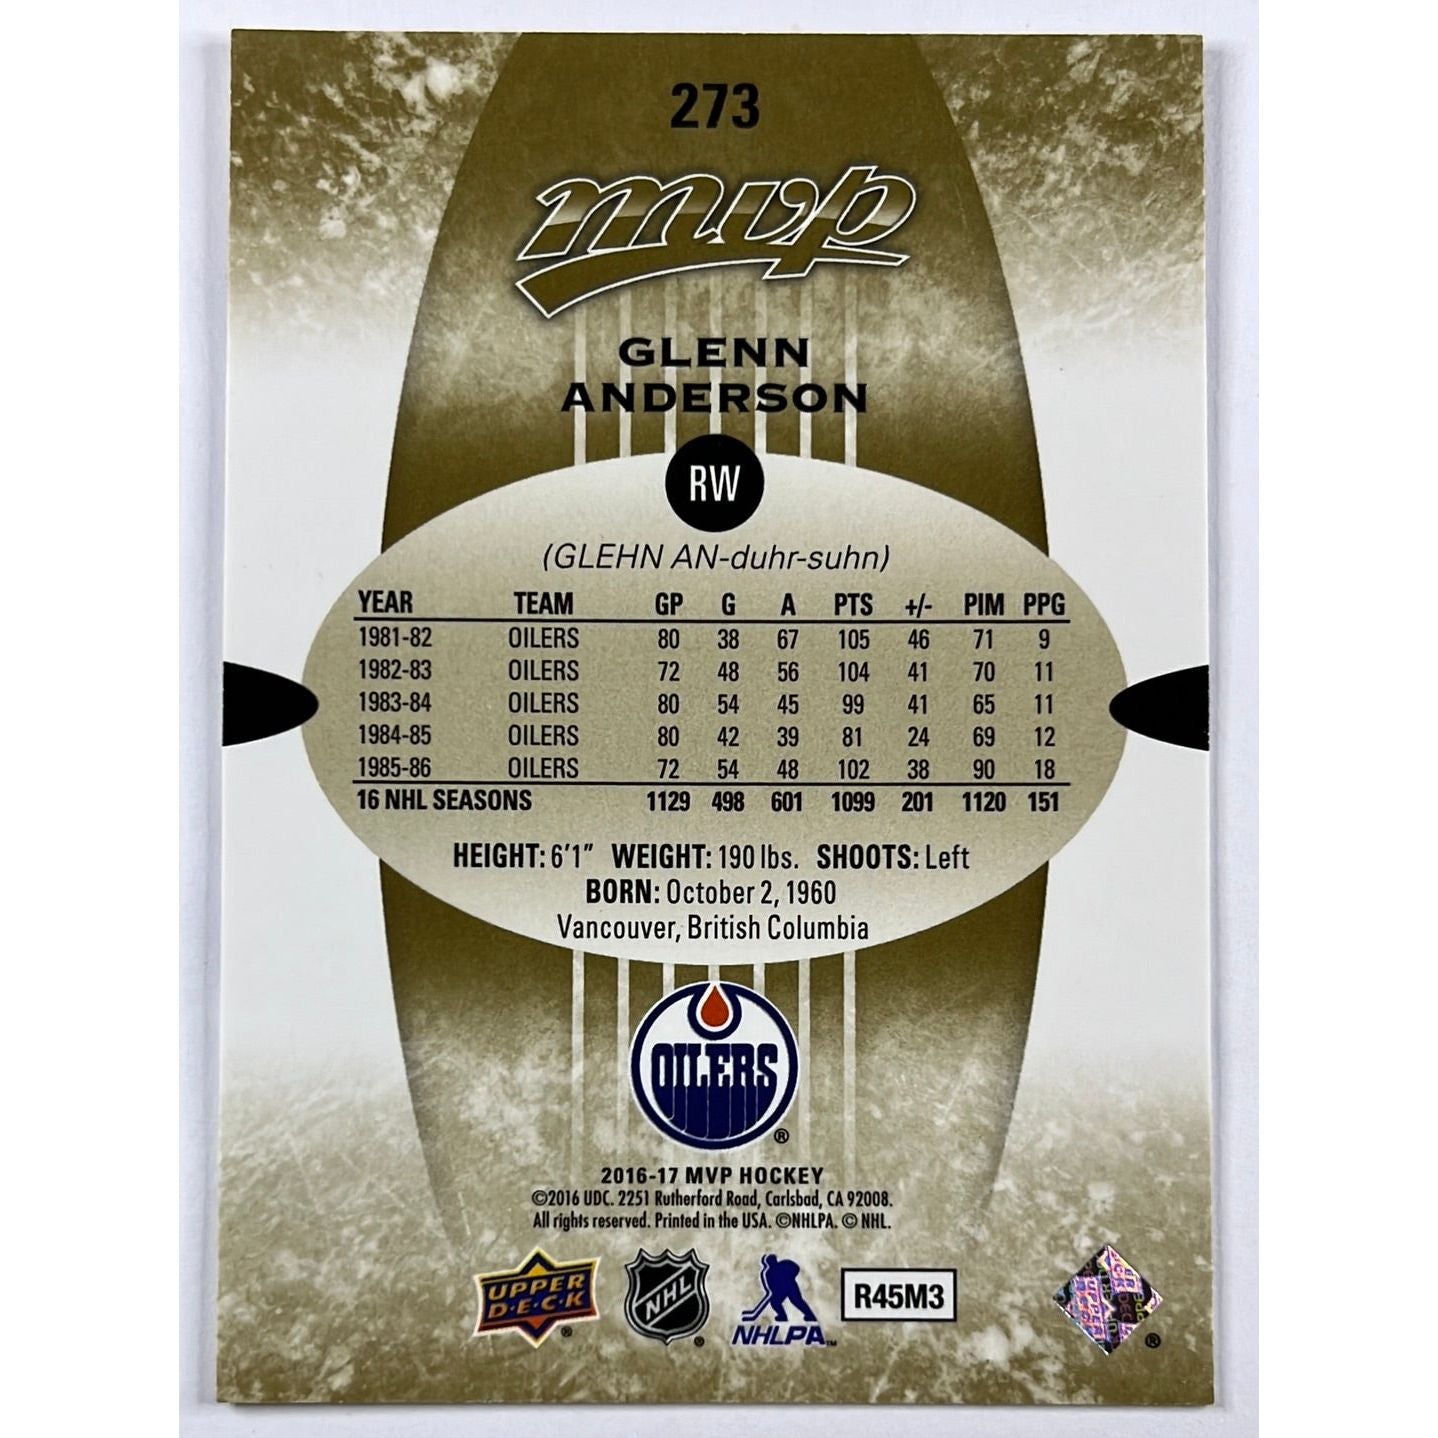 2016-17 MVP Glen Anderson Gold Super Script /135